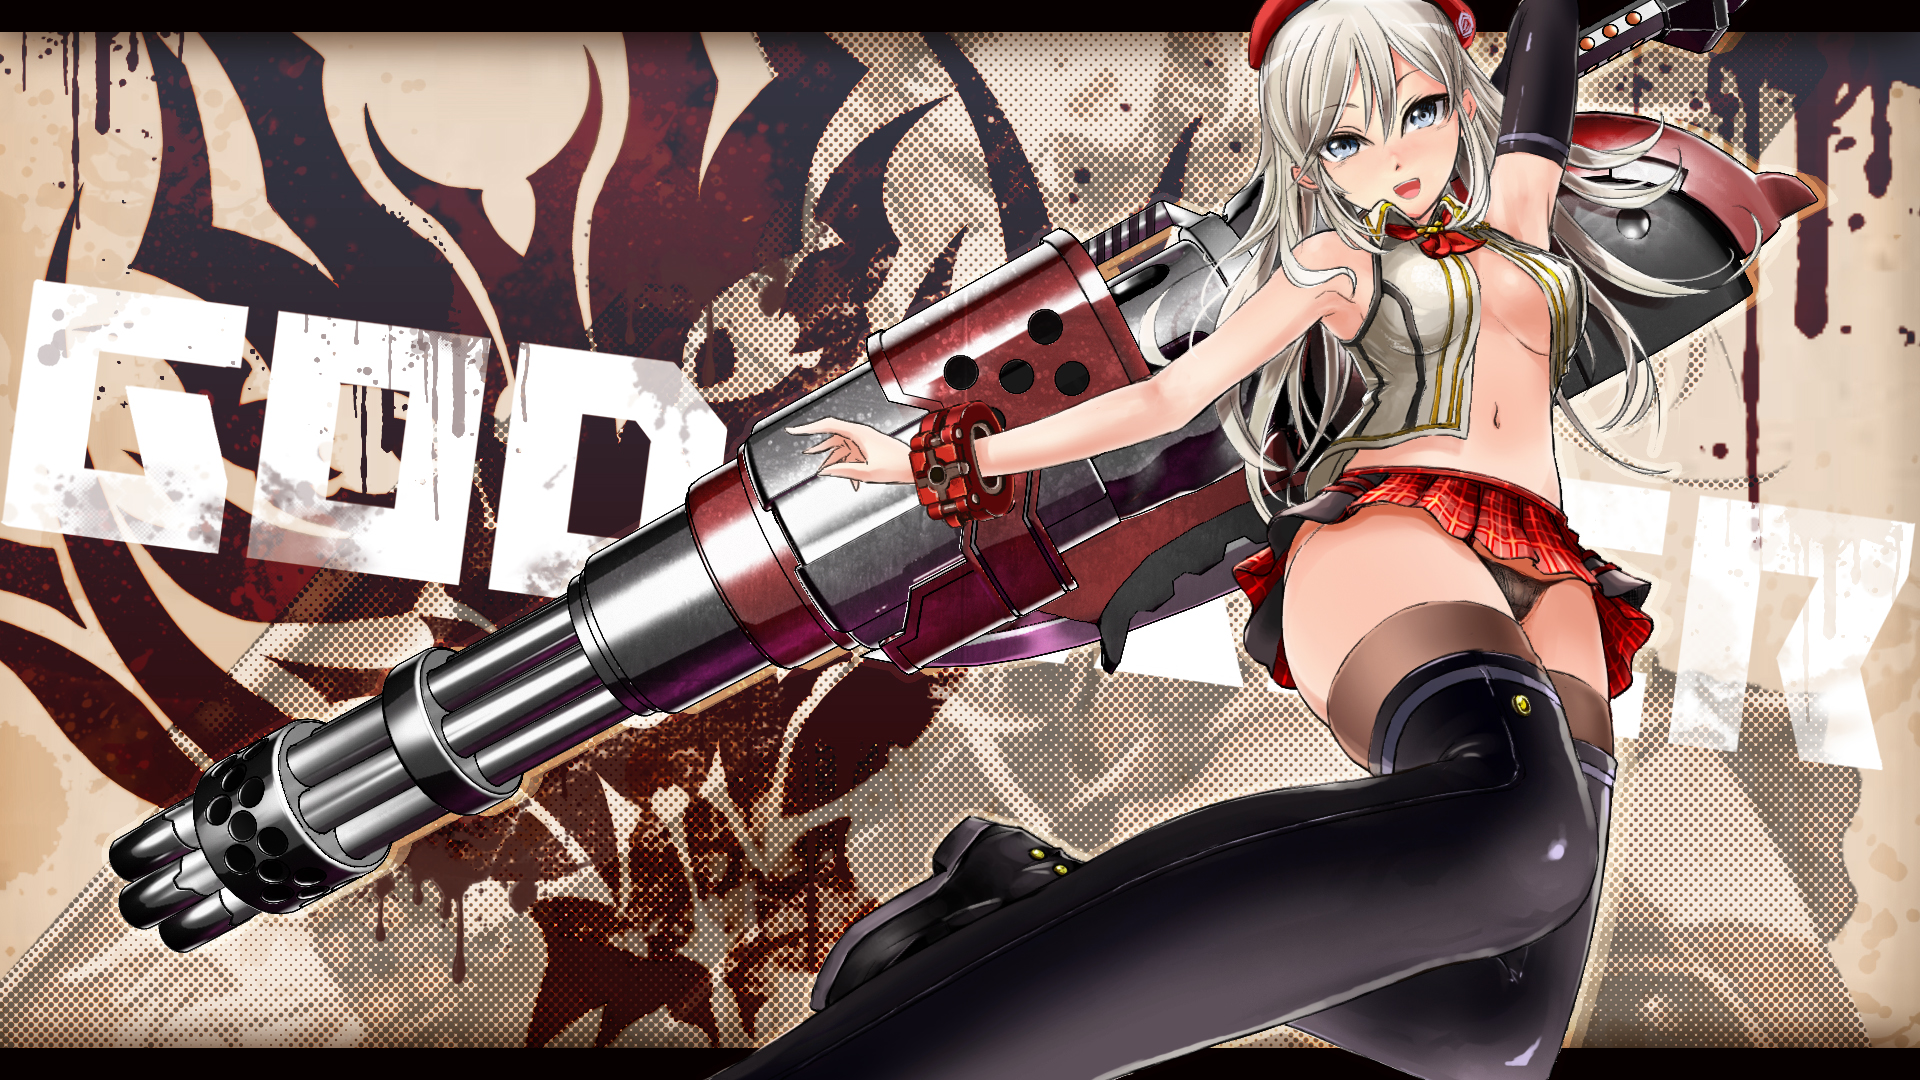 Anime God Eater HD Wallpaper | Background Image